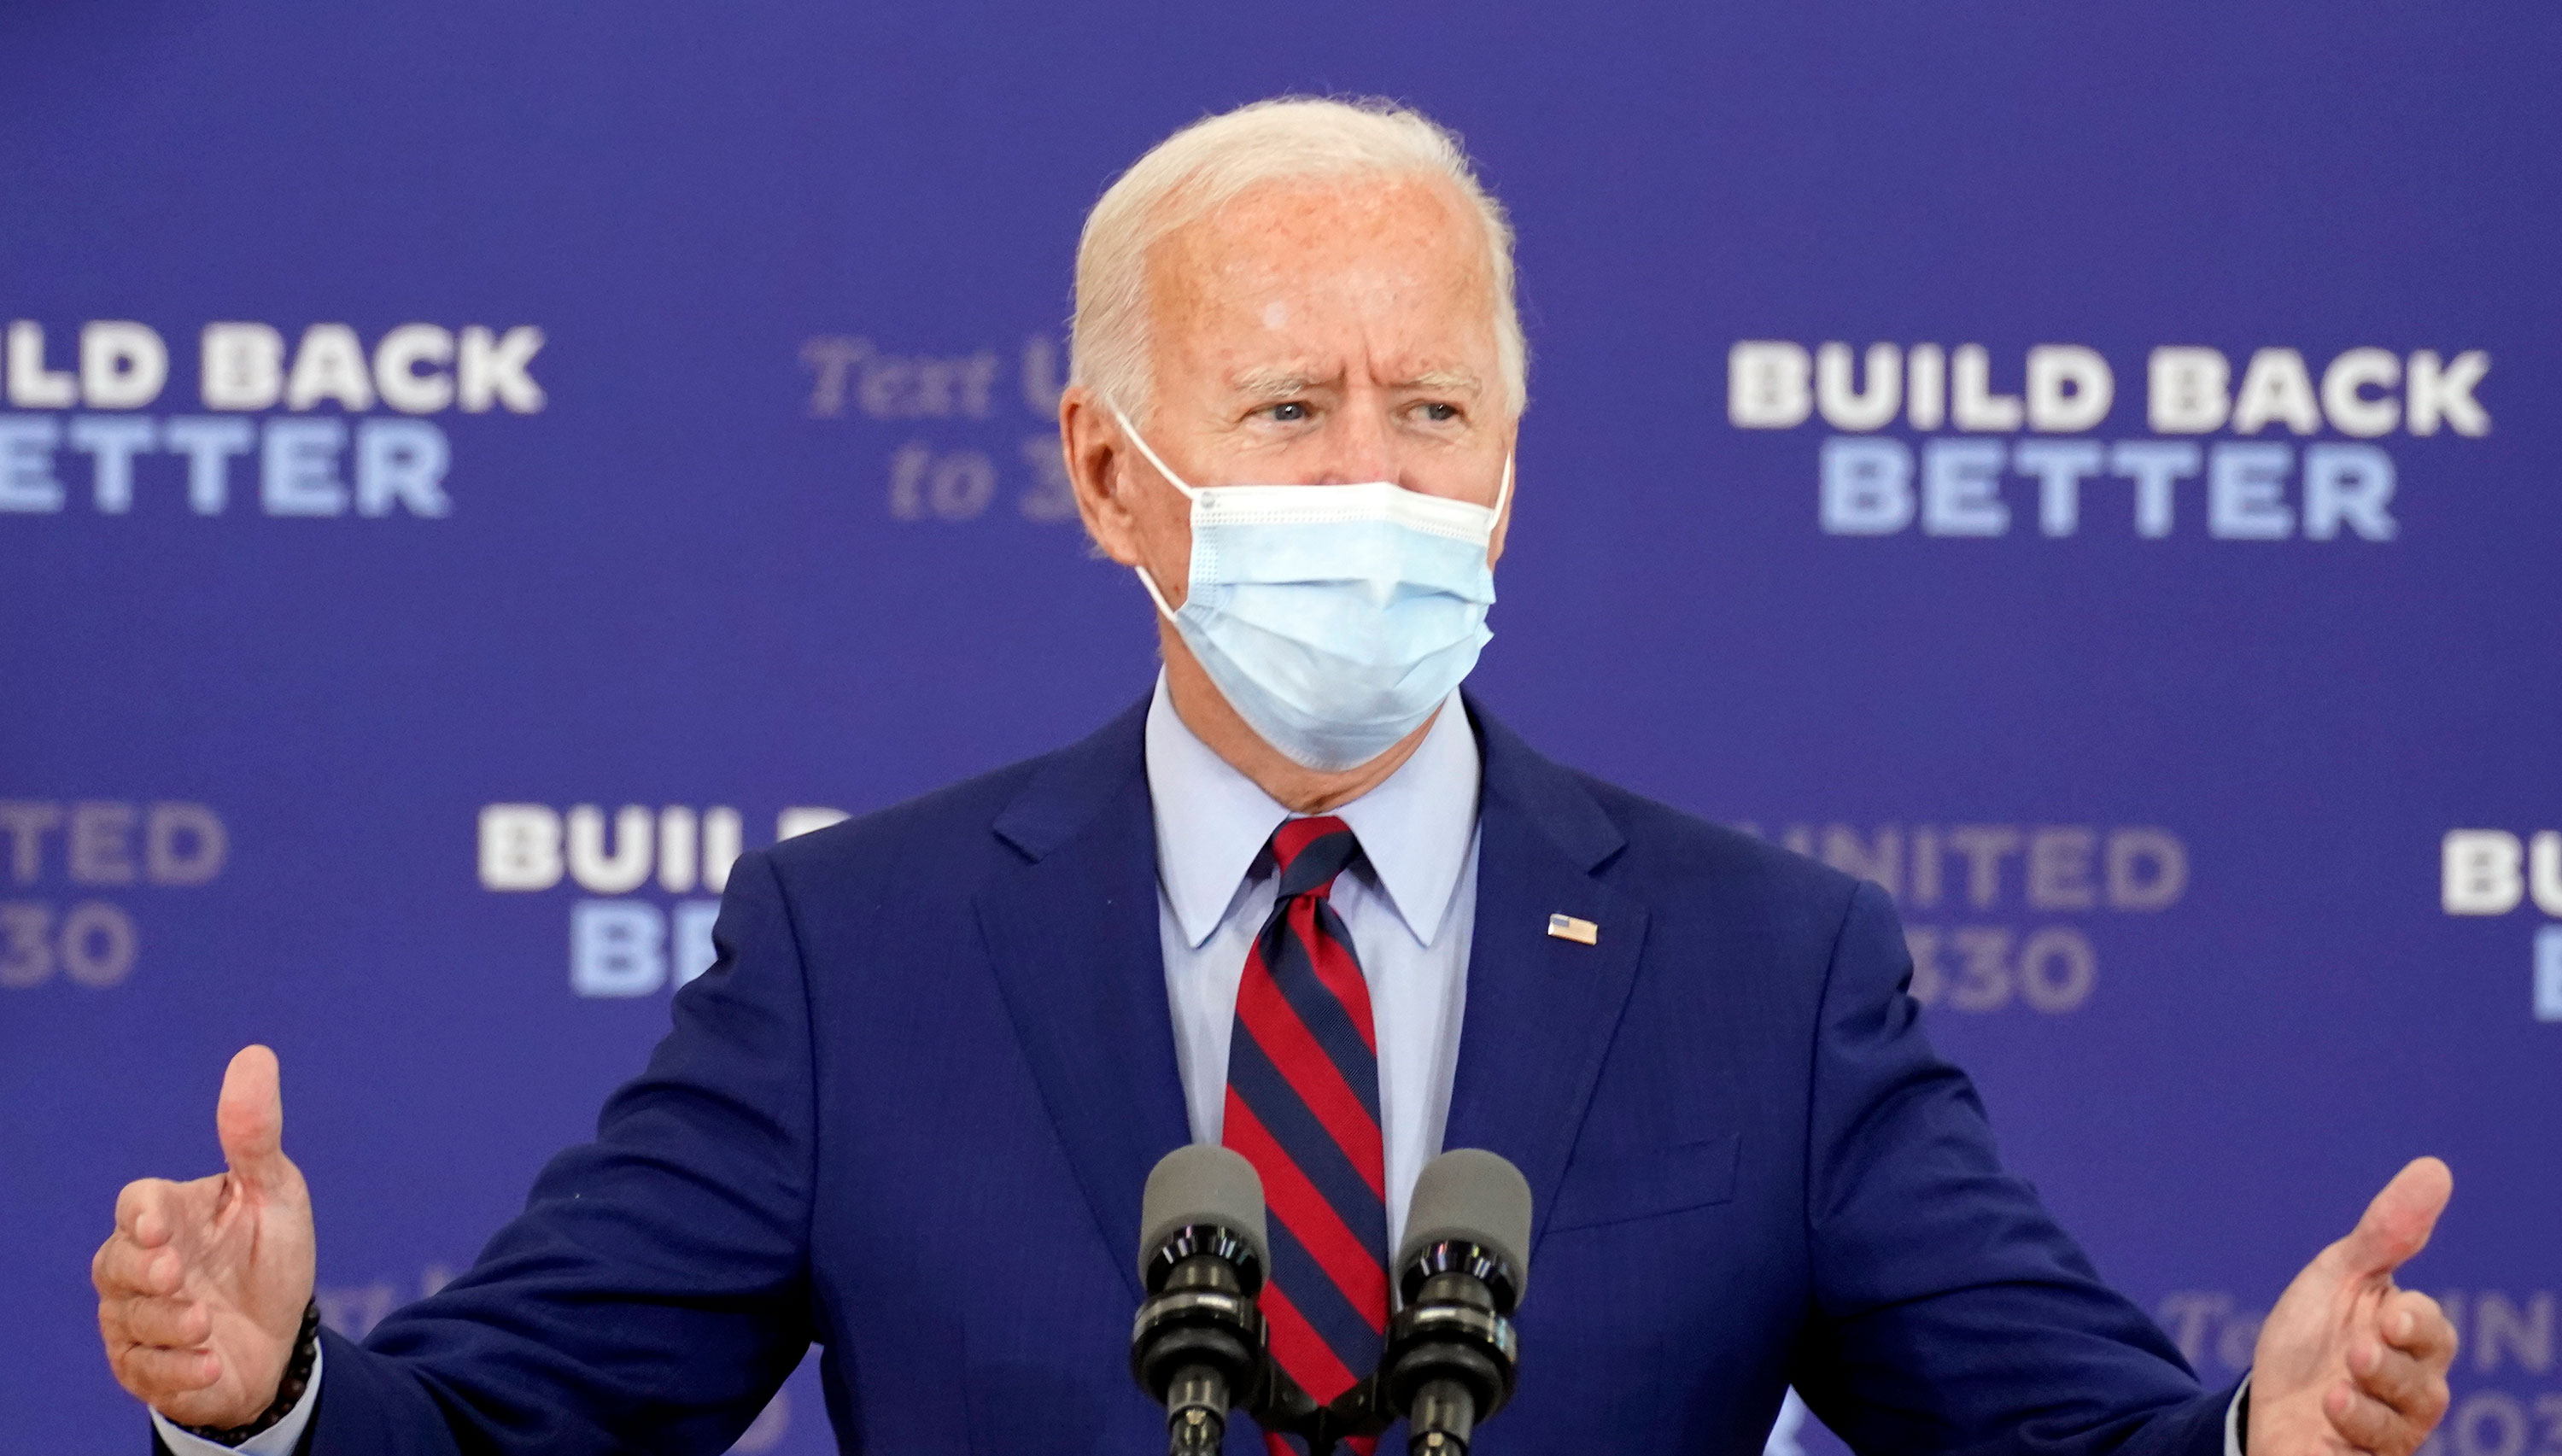 Democratic presidential candidate Joe Biden speaks at Jose Marti Gym on Monday, October 5 in Miami, Florida.